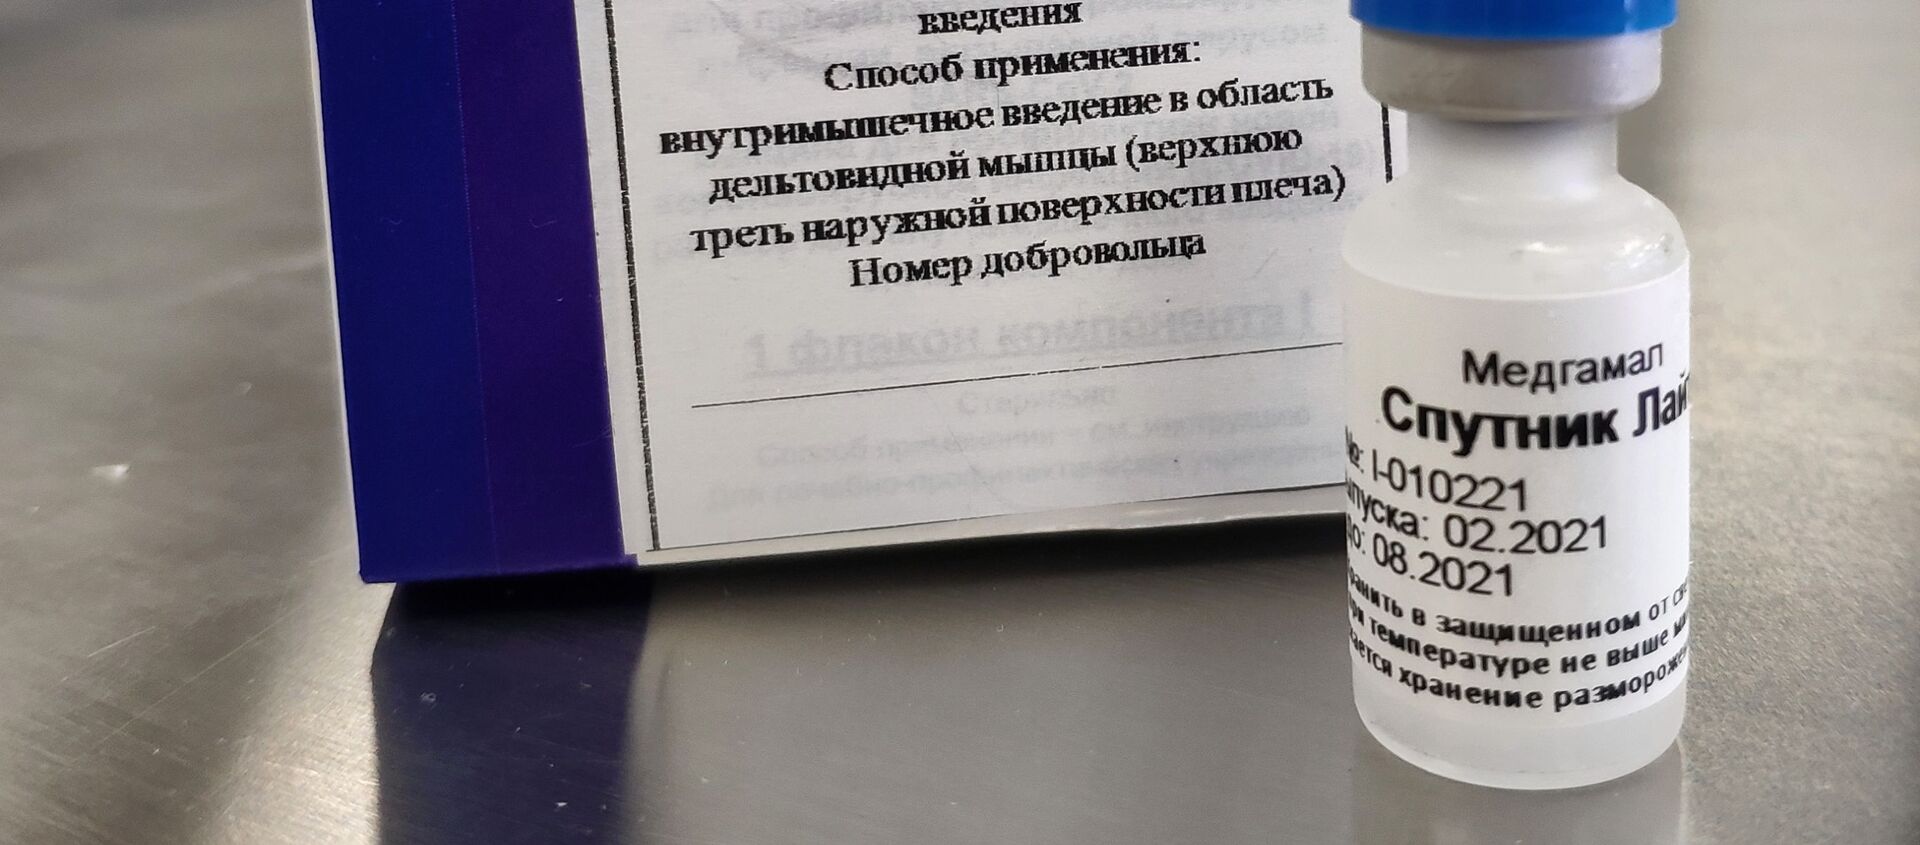 Упаковка однокомпонентной вакцины от COVID-19 Спутник Лайт - 俄羅斯衛星通訊社, 1920, 12.06.2021